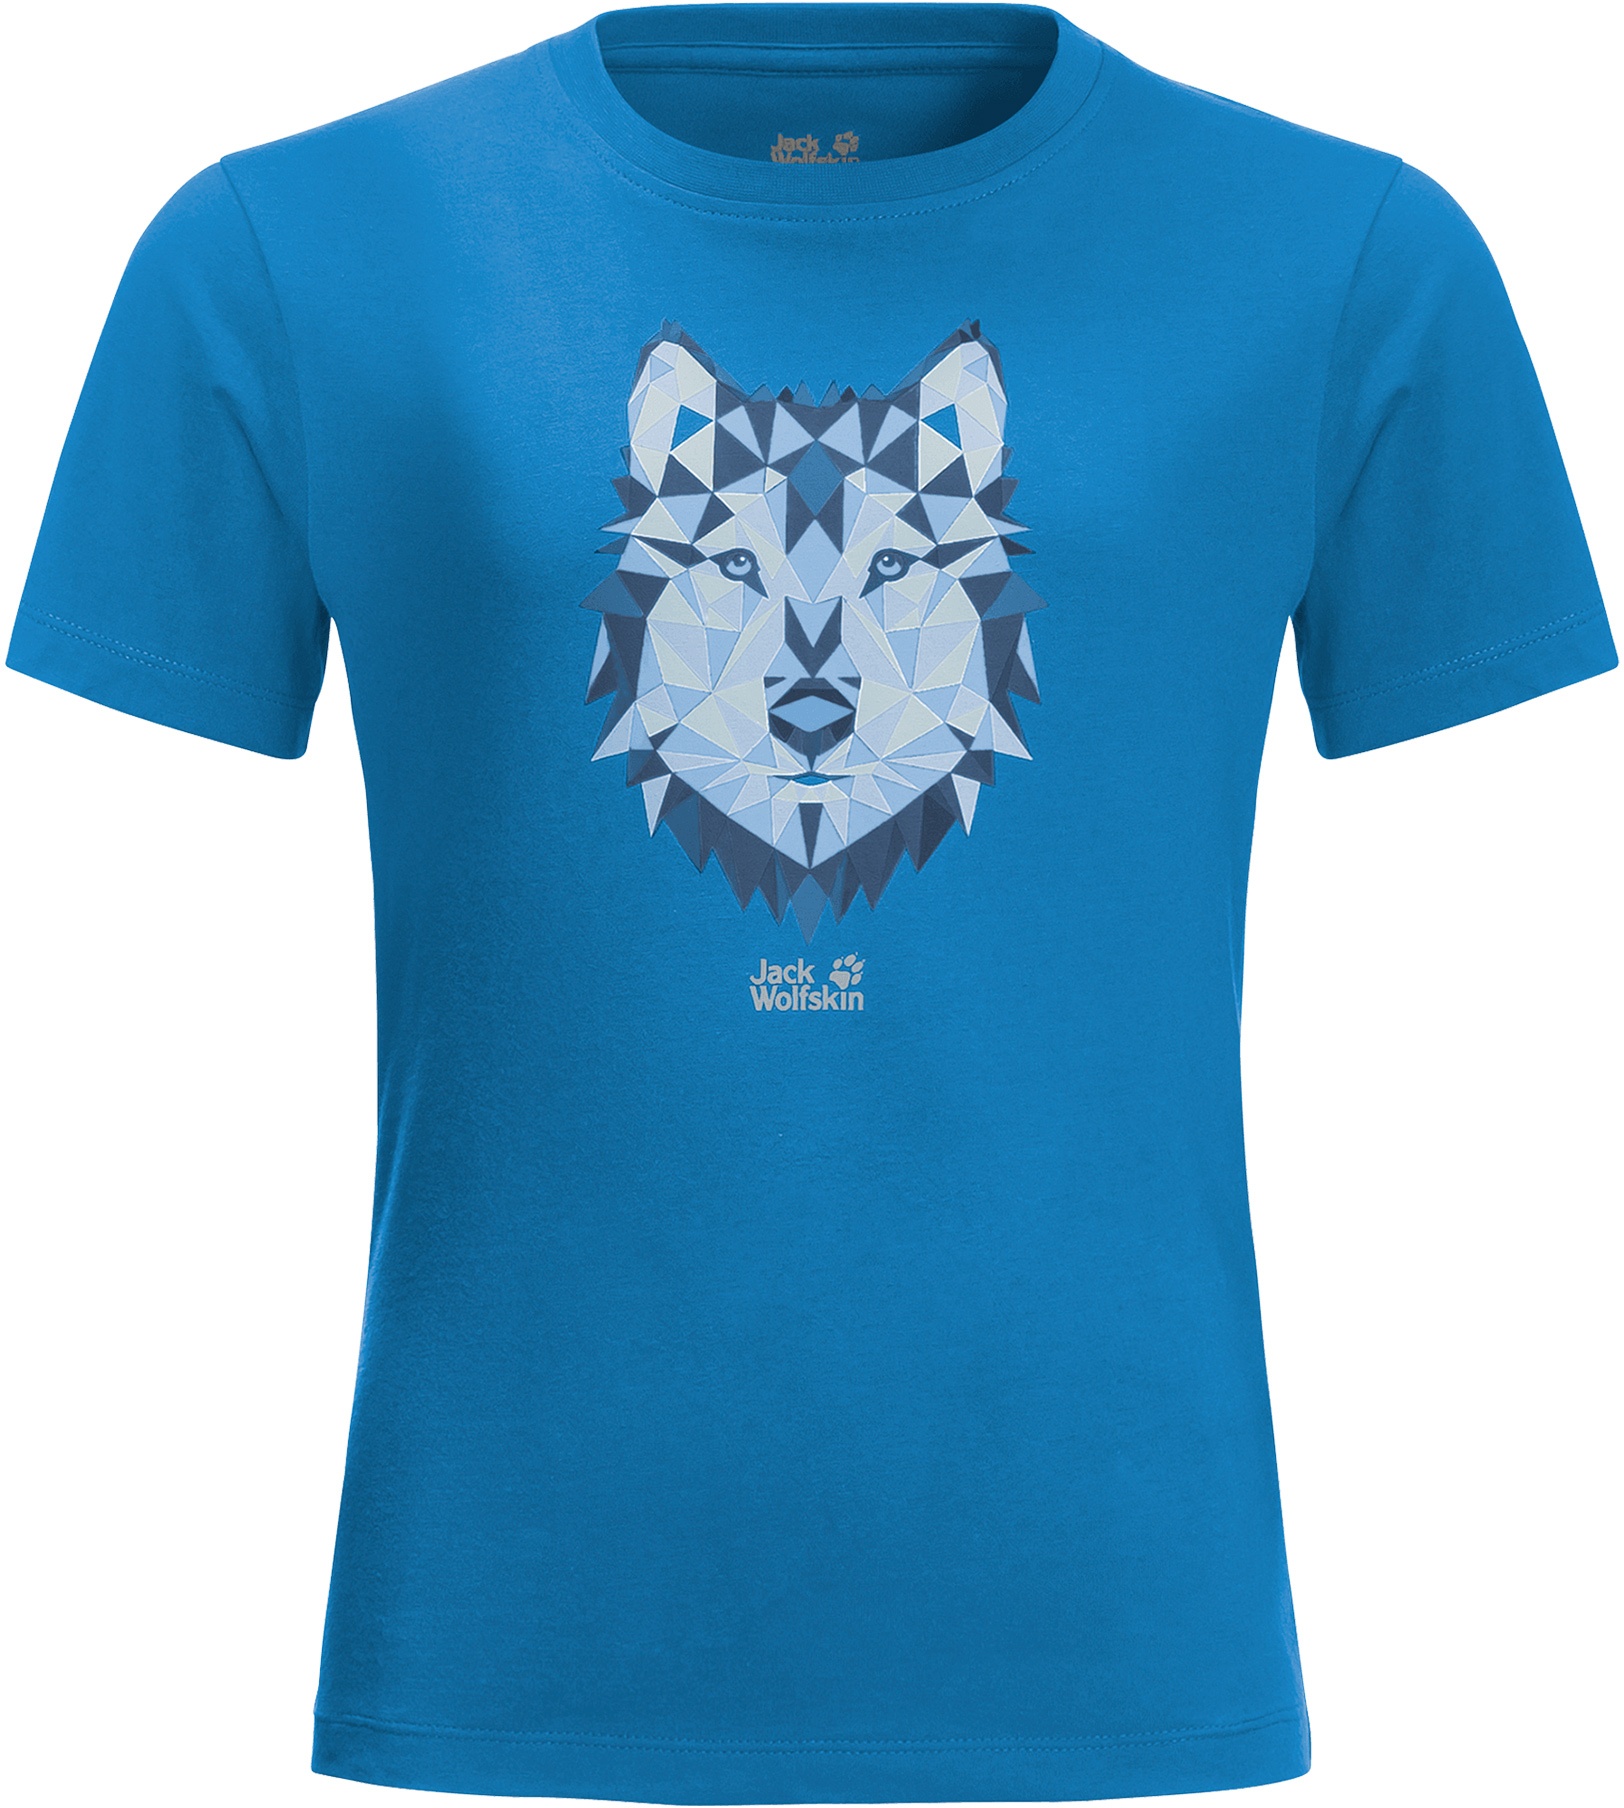 Jack Wolfskin - T-Shirt BRAND WOLF in sky blue, Gr.116